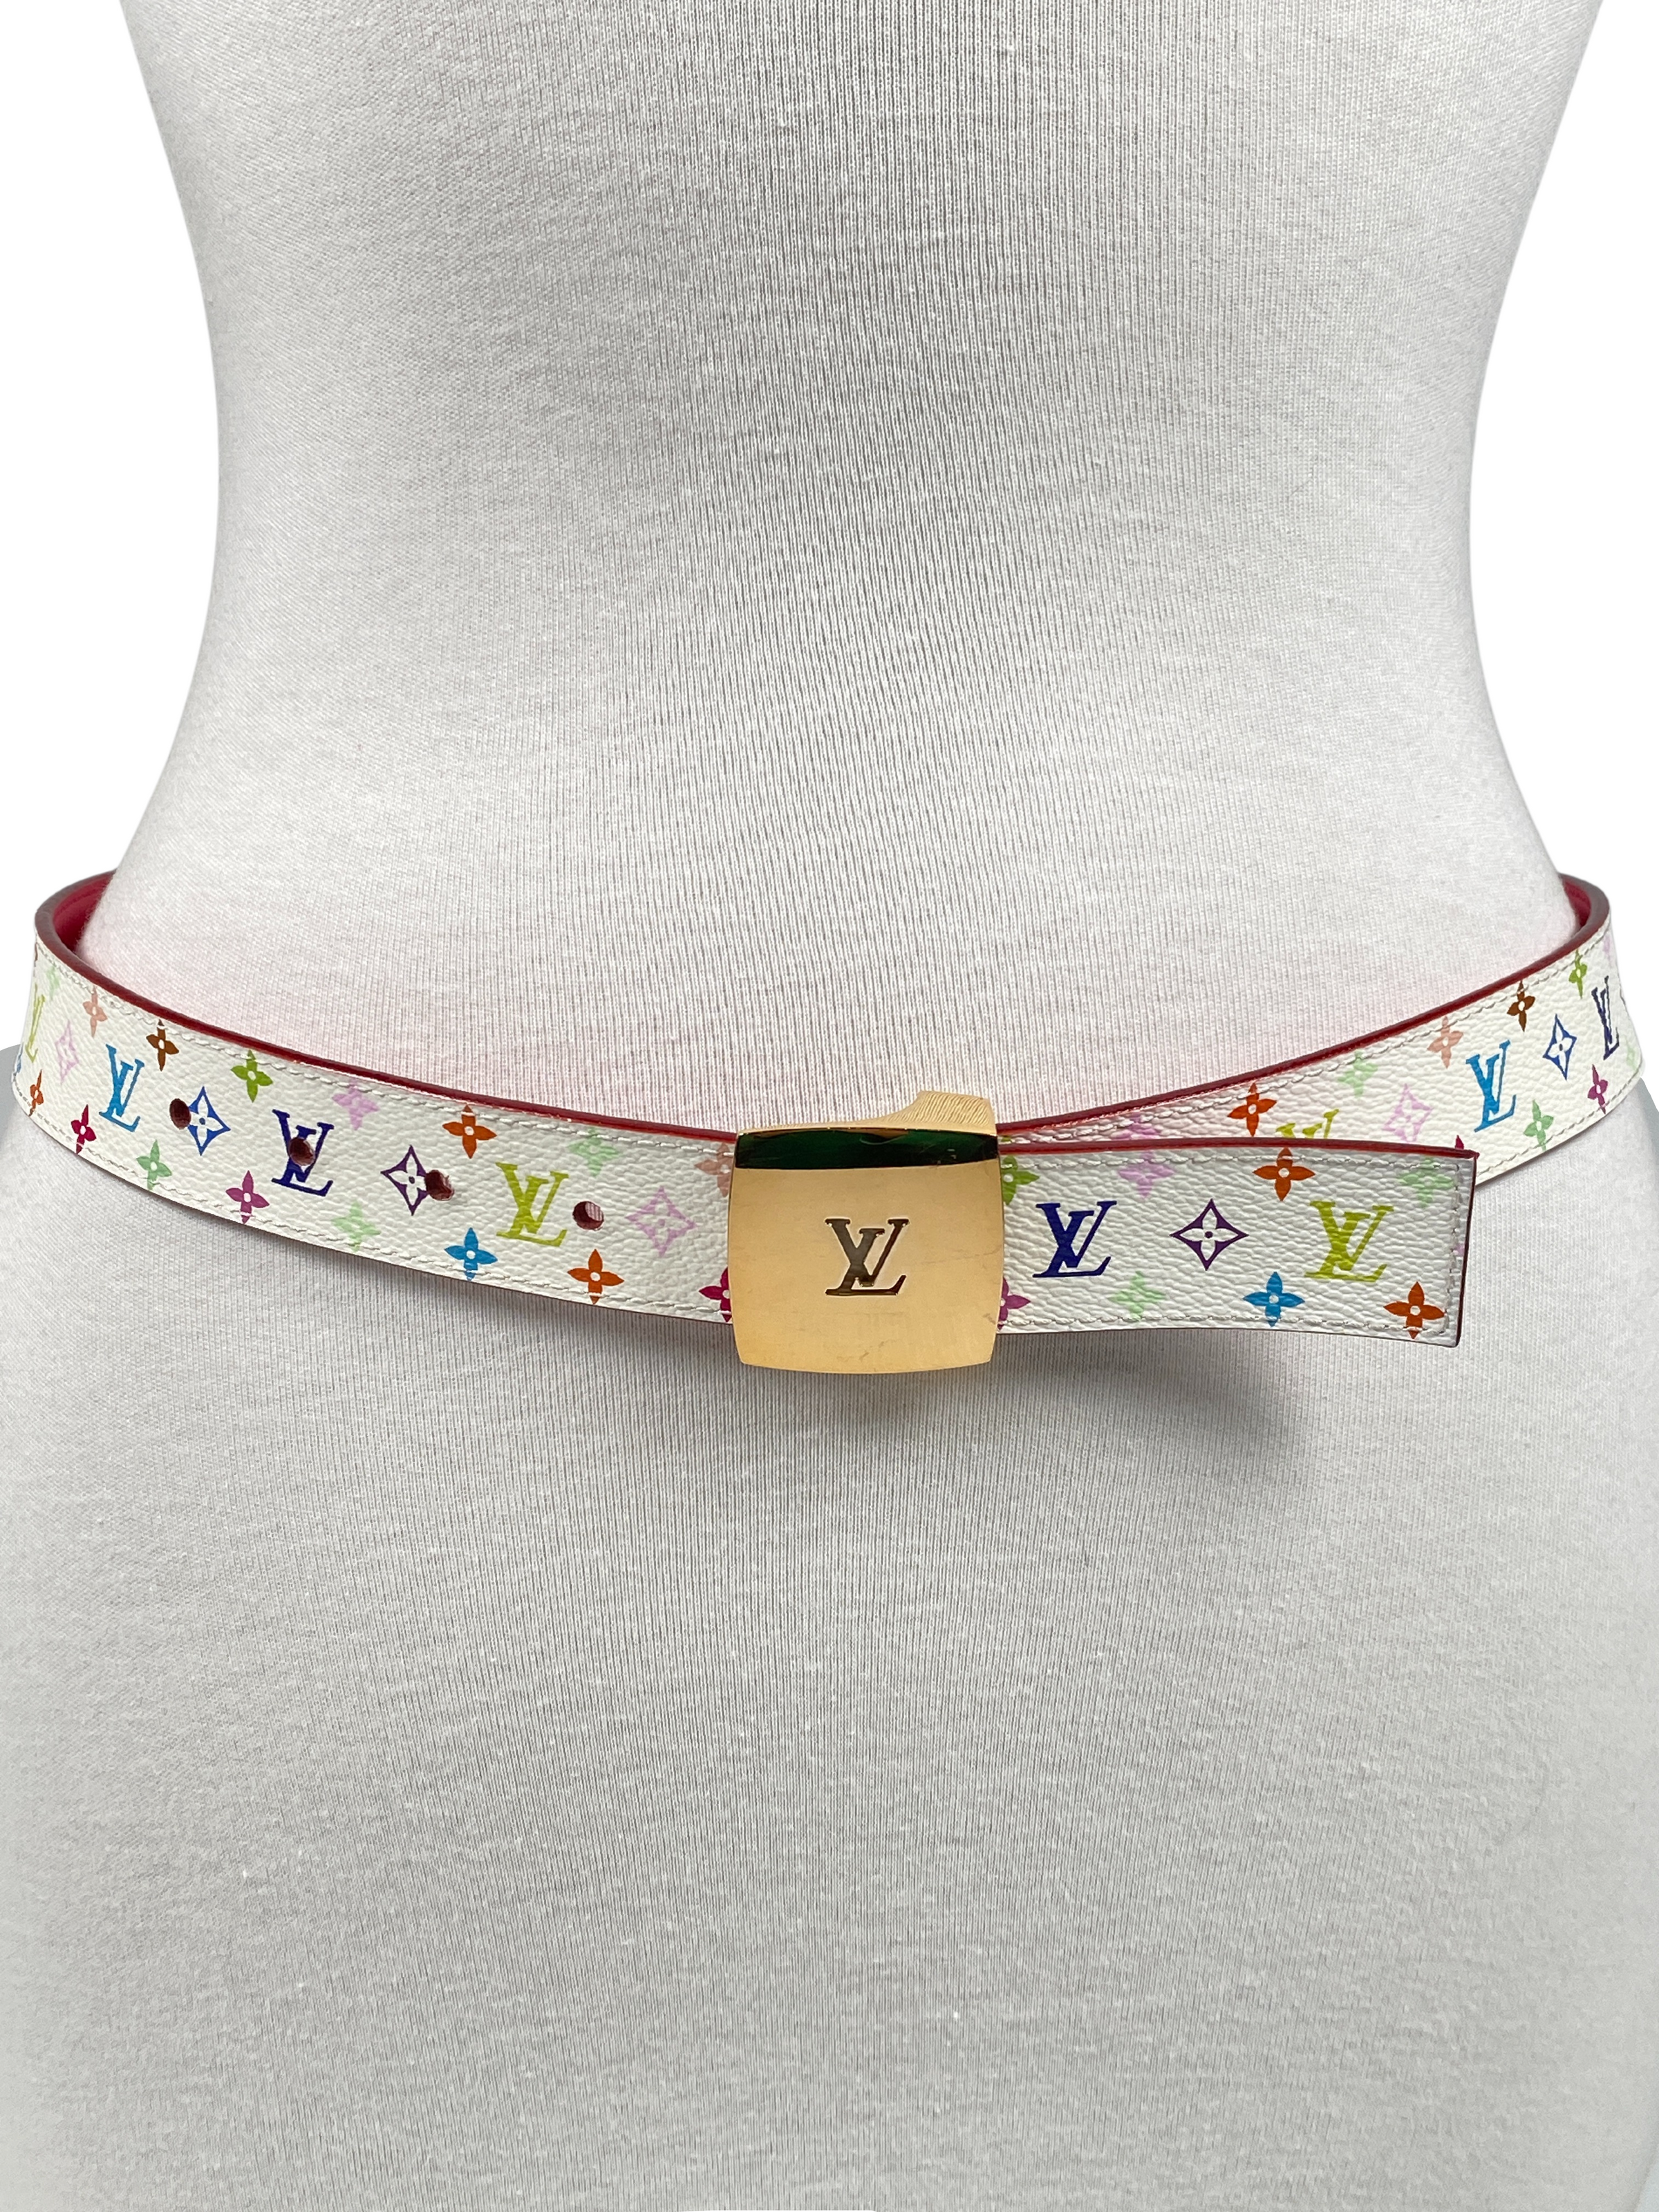 Louis Vuitton White Multicolore Murakami Belt